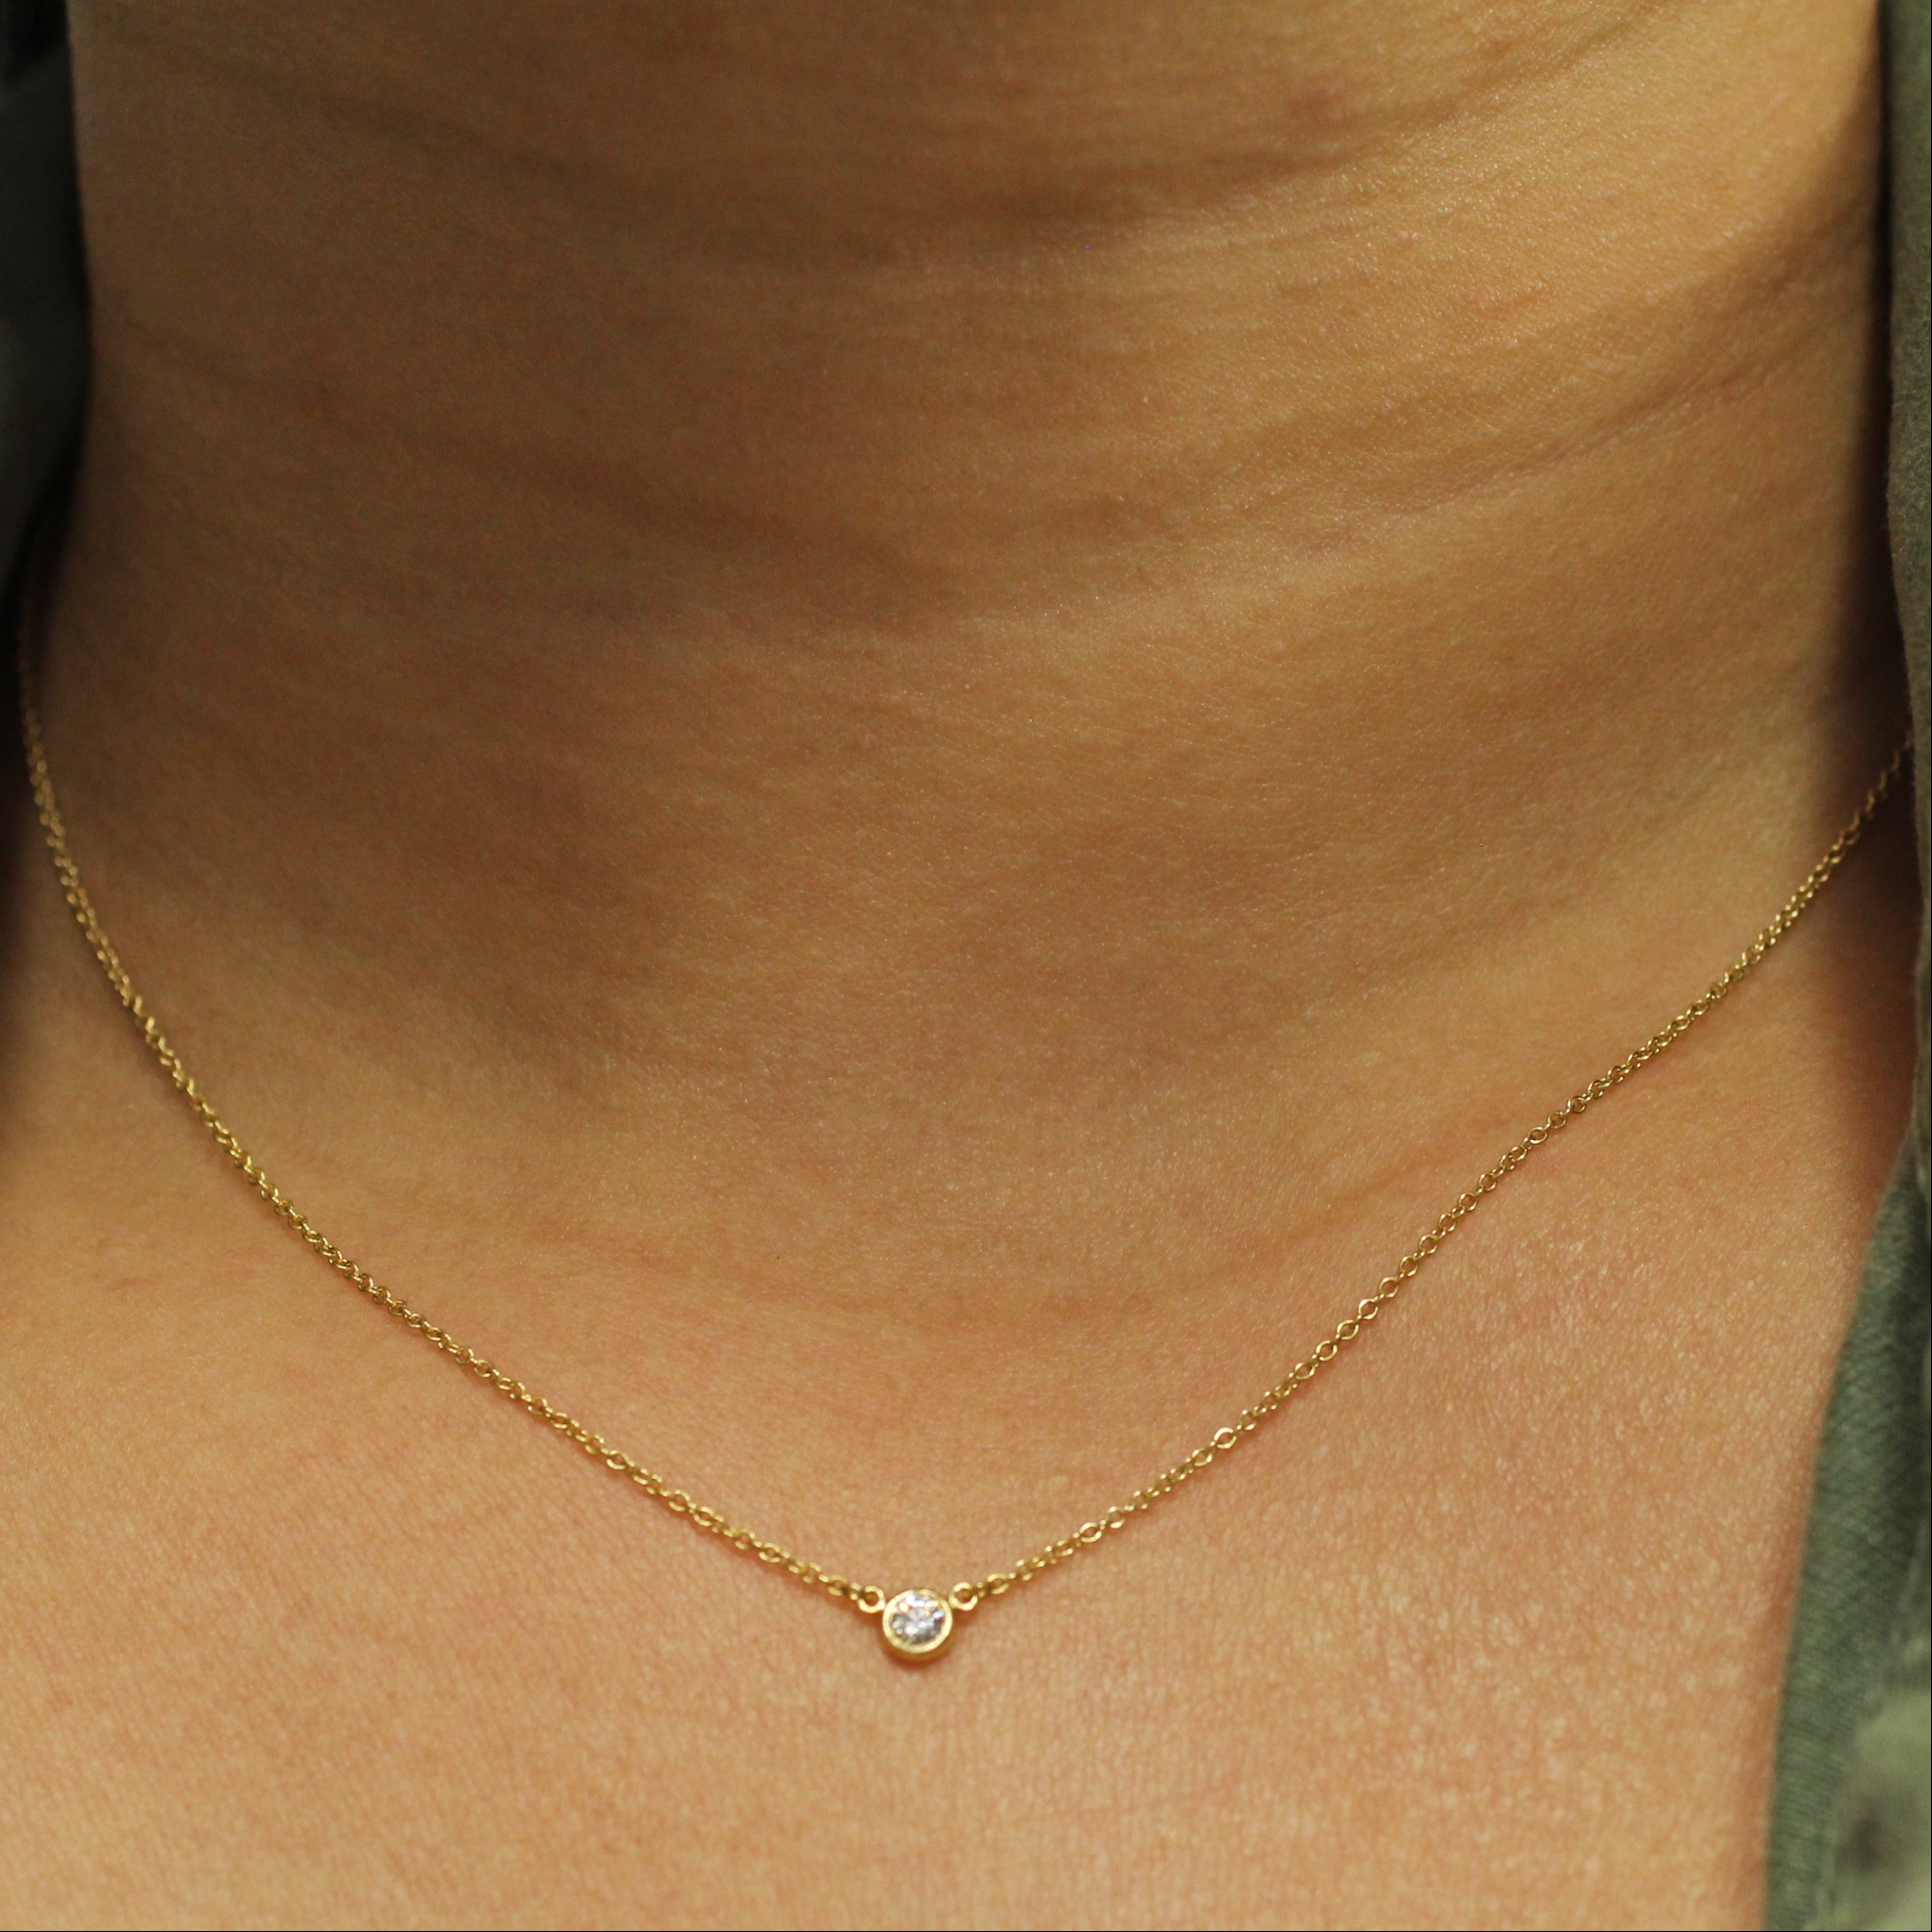 16 inch tiffany necklace